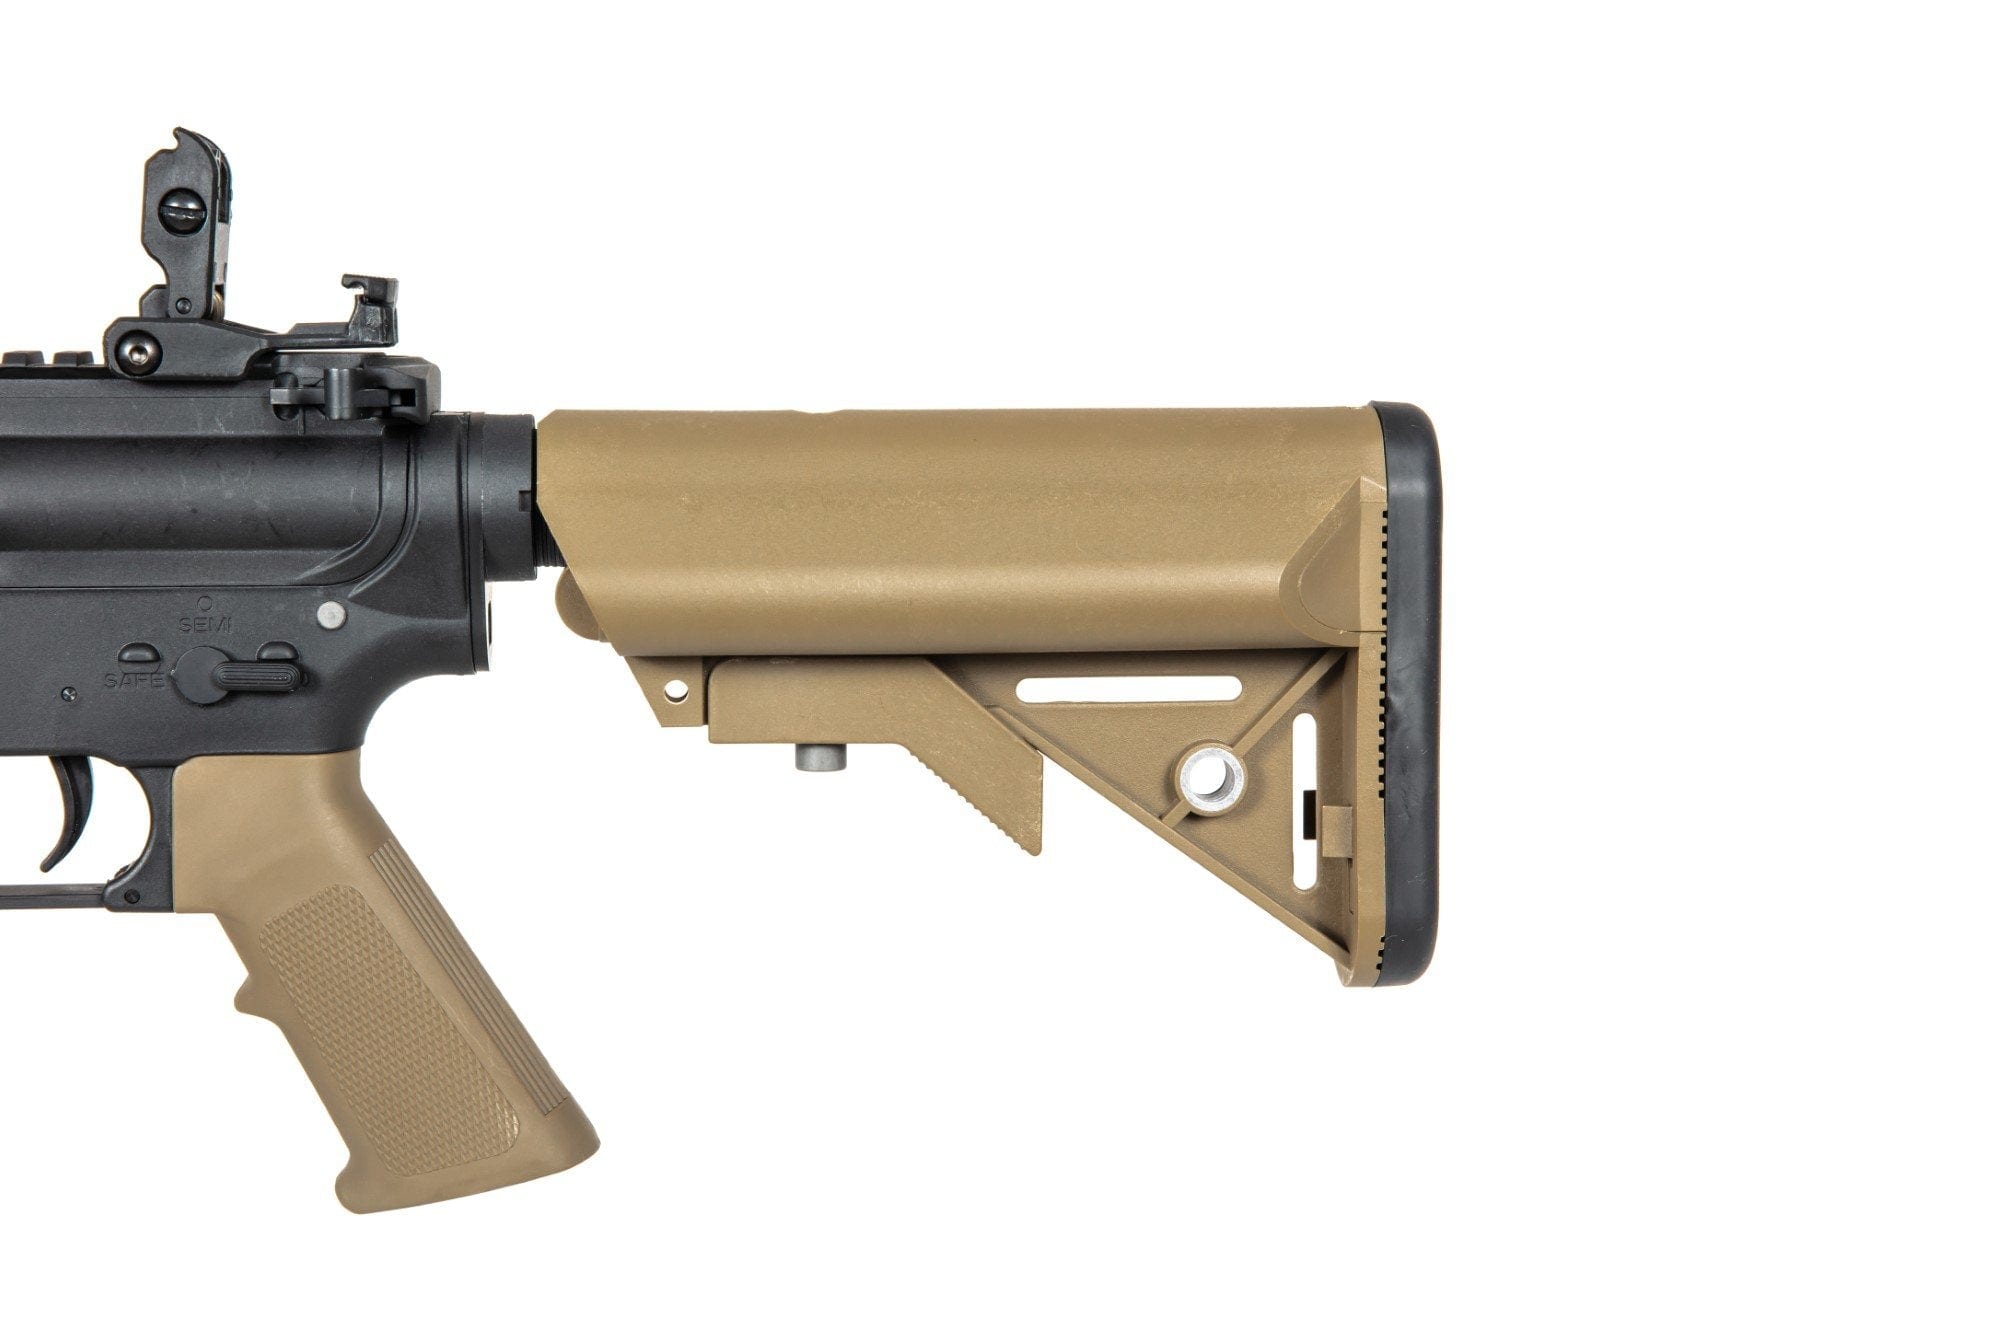 RRA SA-C05 CORE™ Airsoft electric gun - Half-Tan by Specna Arms on Airsoft Mania Europe